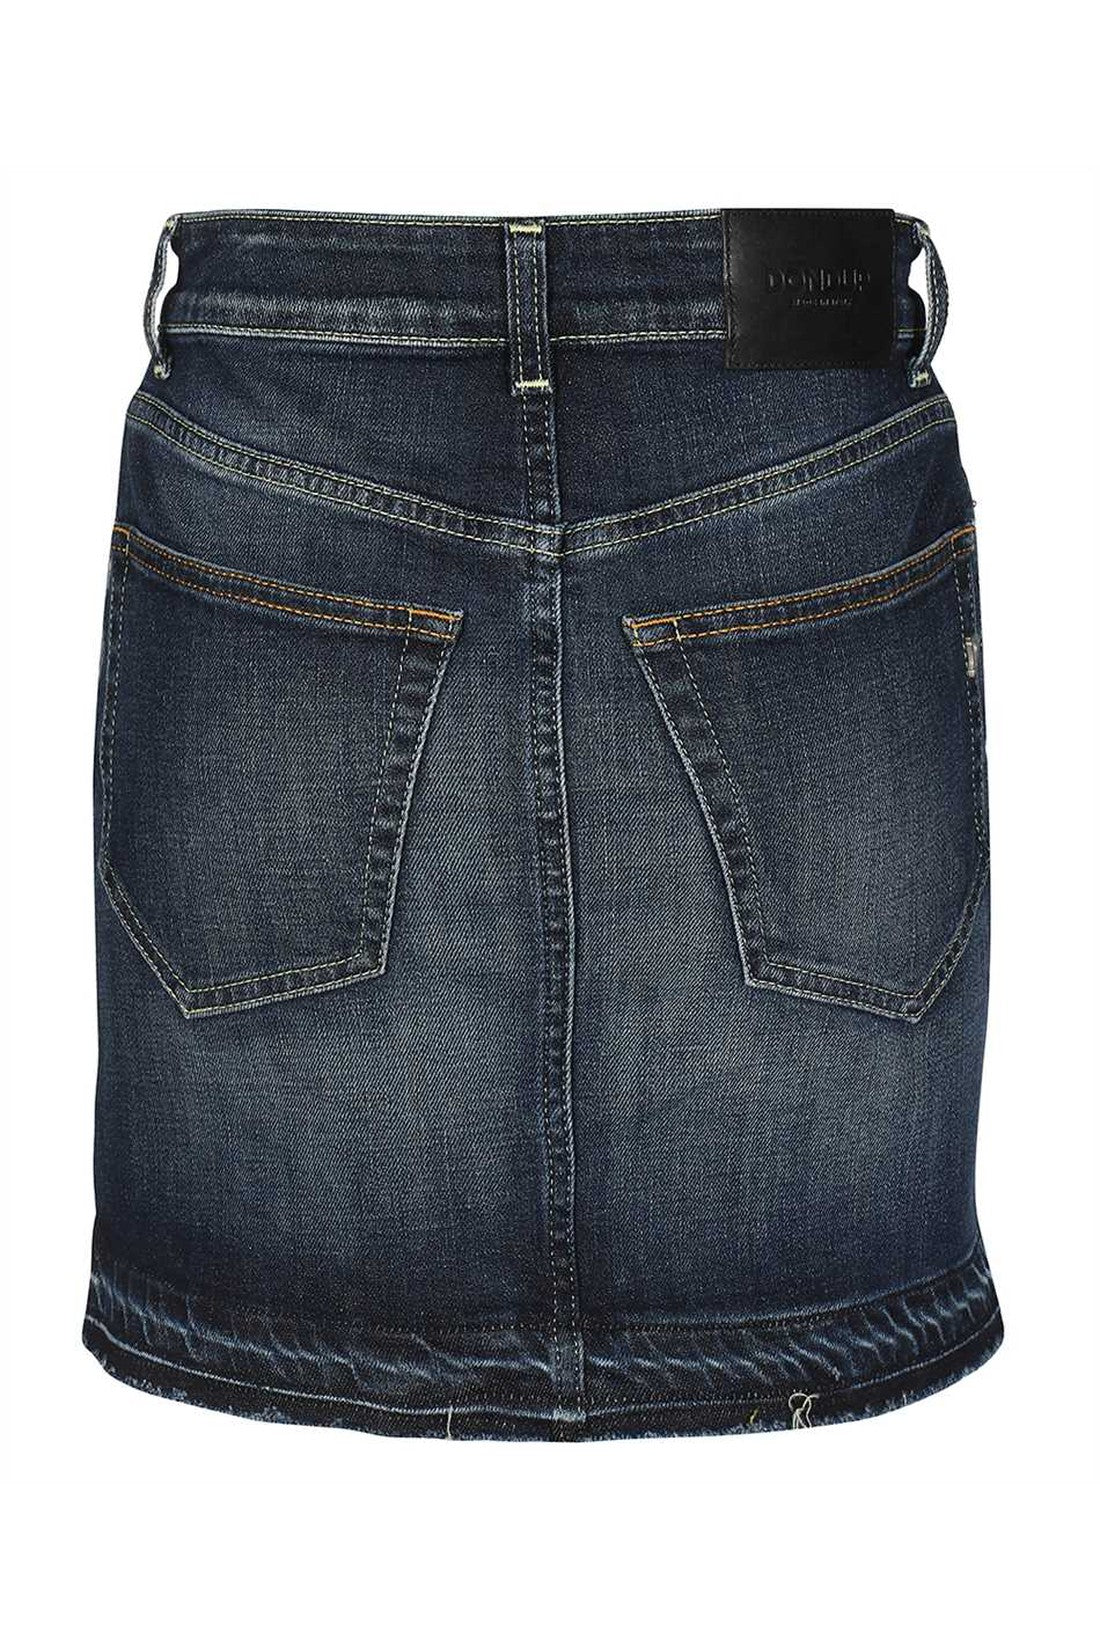 Denim skirt-Bekleidung Röcke-Dondup-OUTLET-SALE-ARCHIVIST